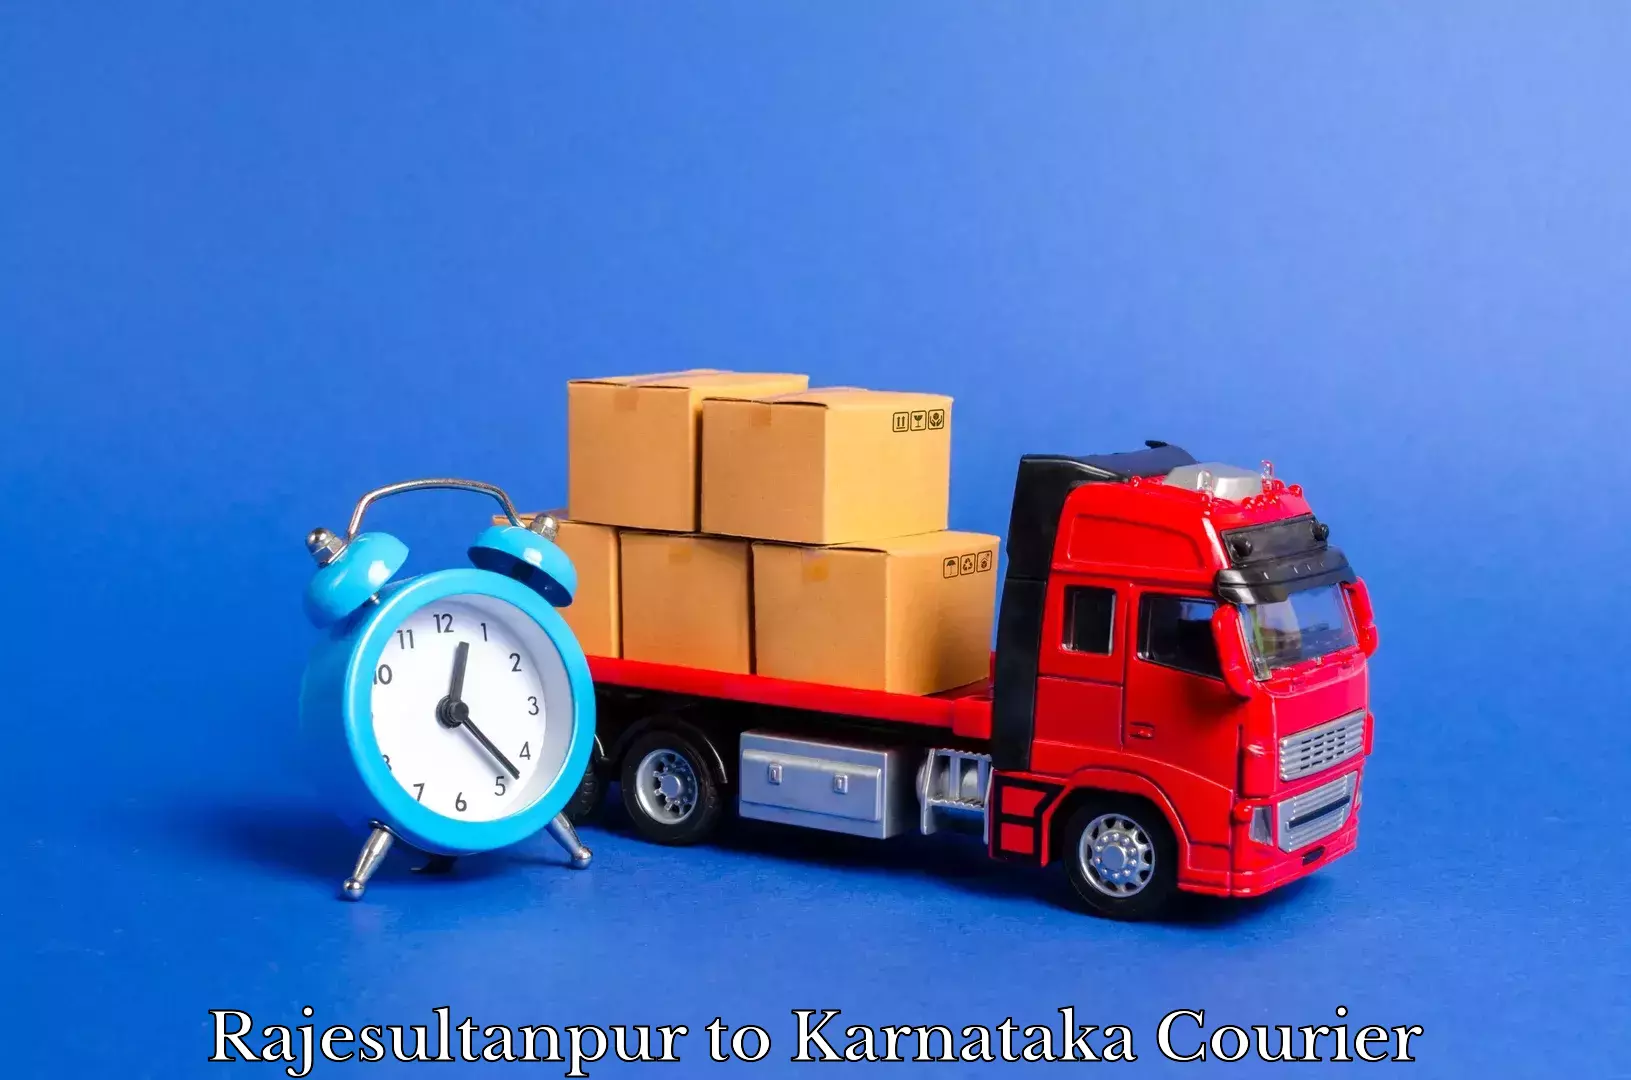 Furniture movers and packers Rajesultanpur to Karnataka